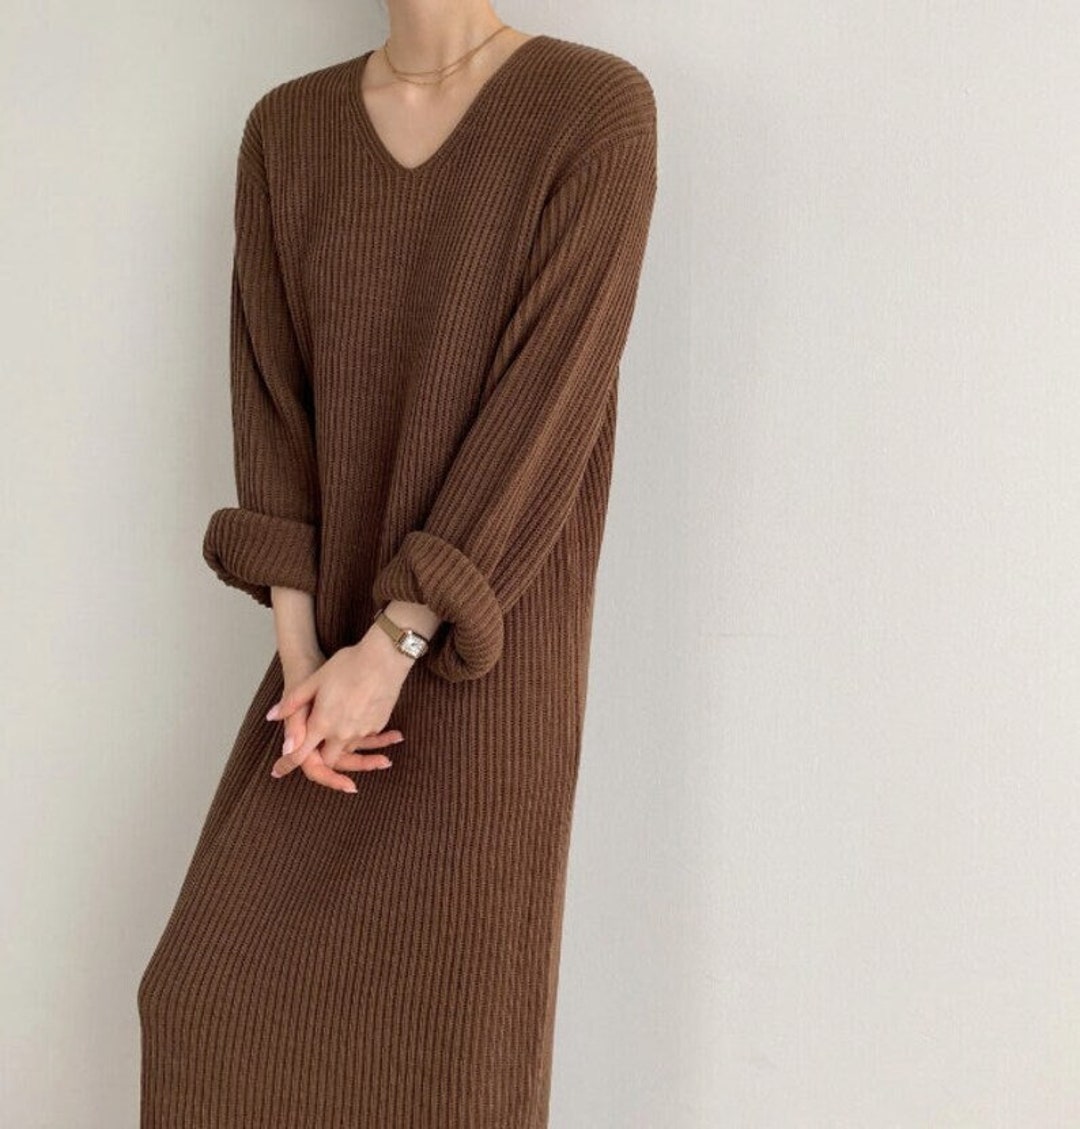 Sweater Dress / Long Sweater Dress / Maxi Long Knit Dress / - Etsy